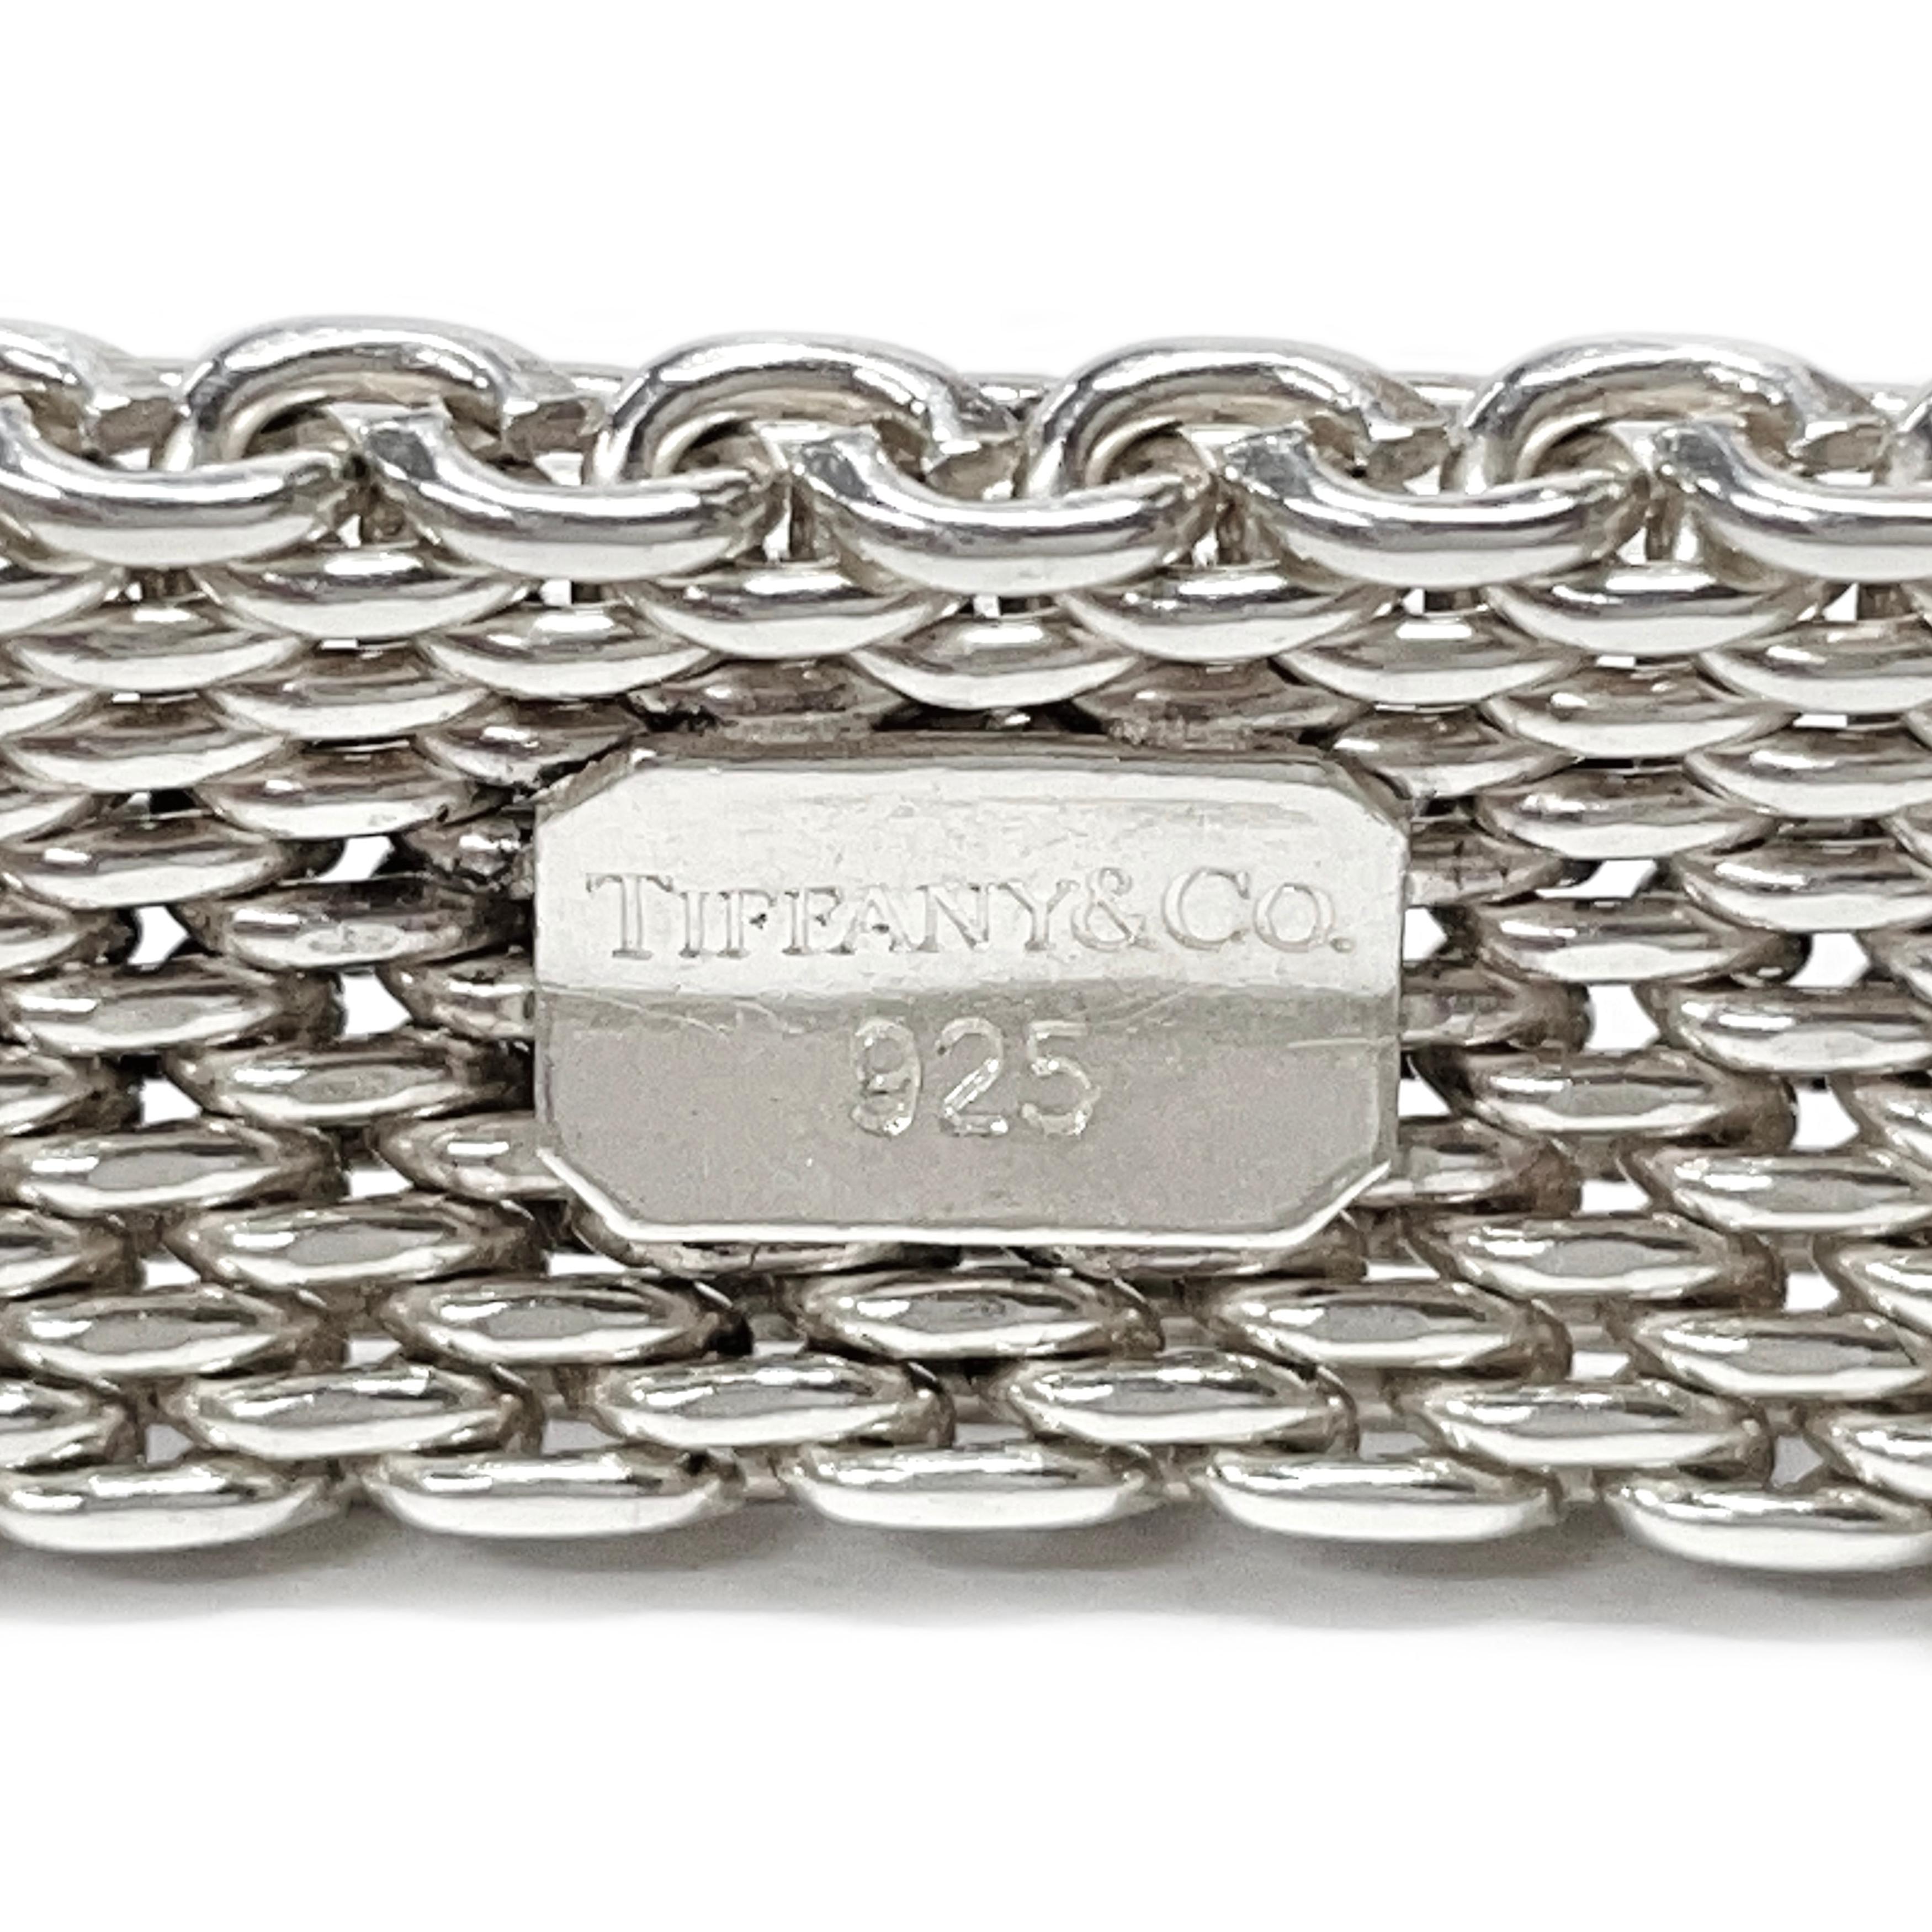 silver mesh bracelet